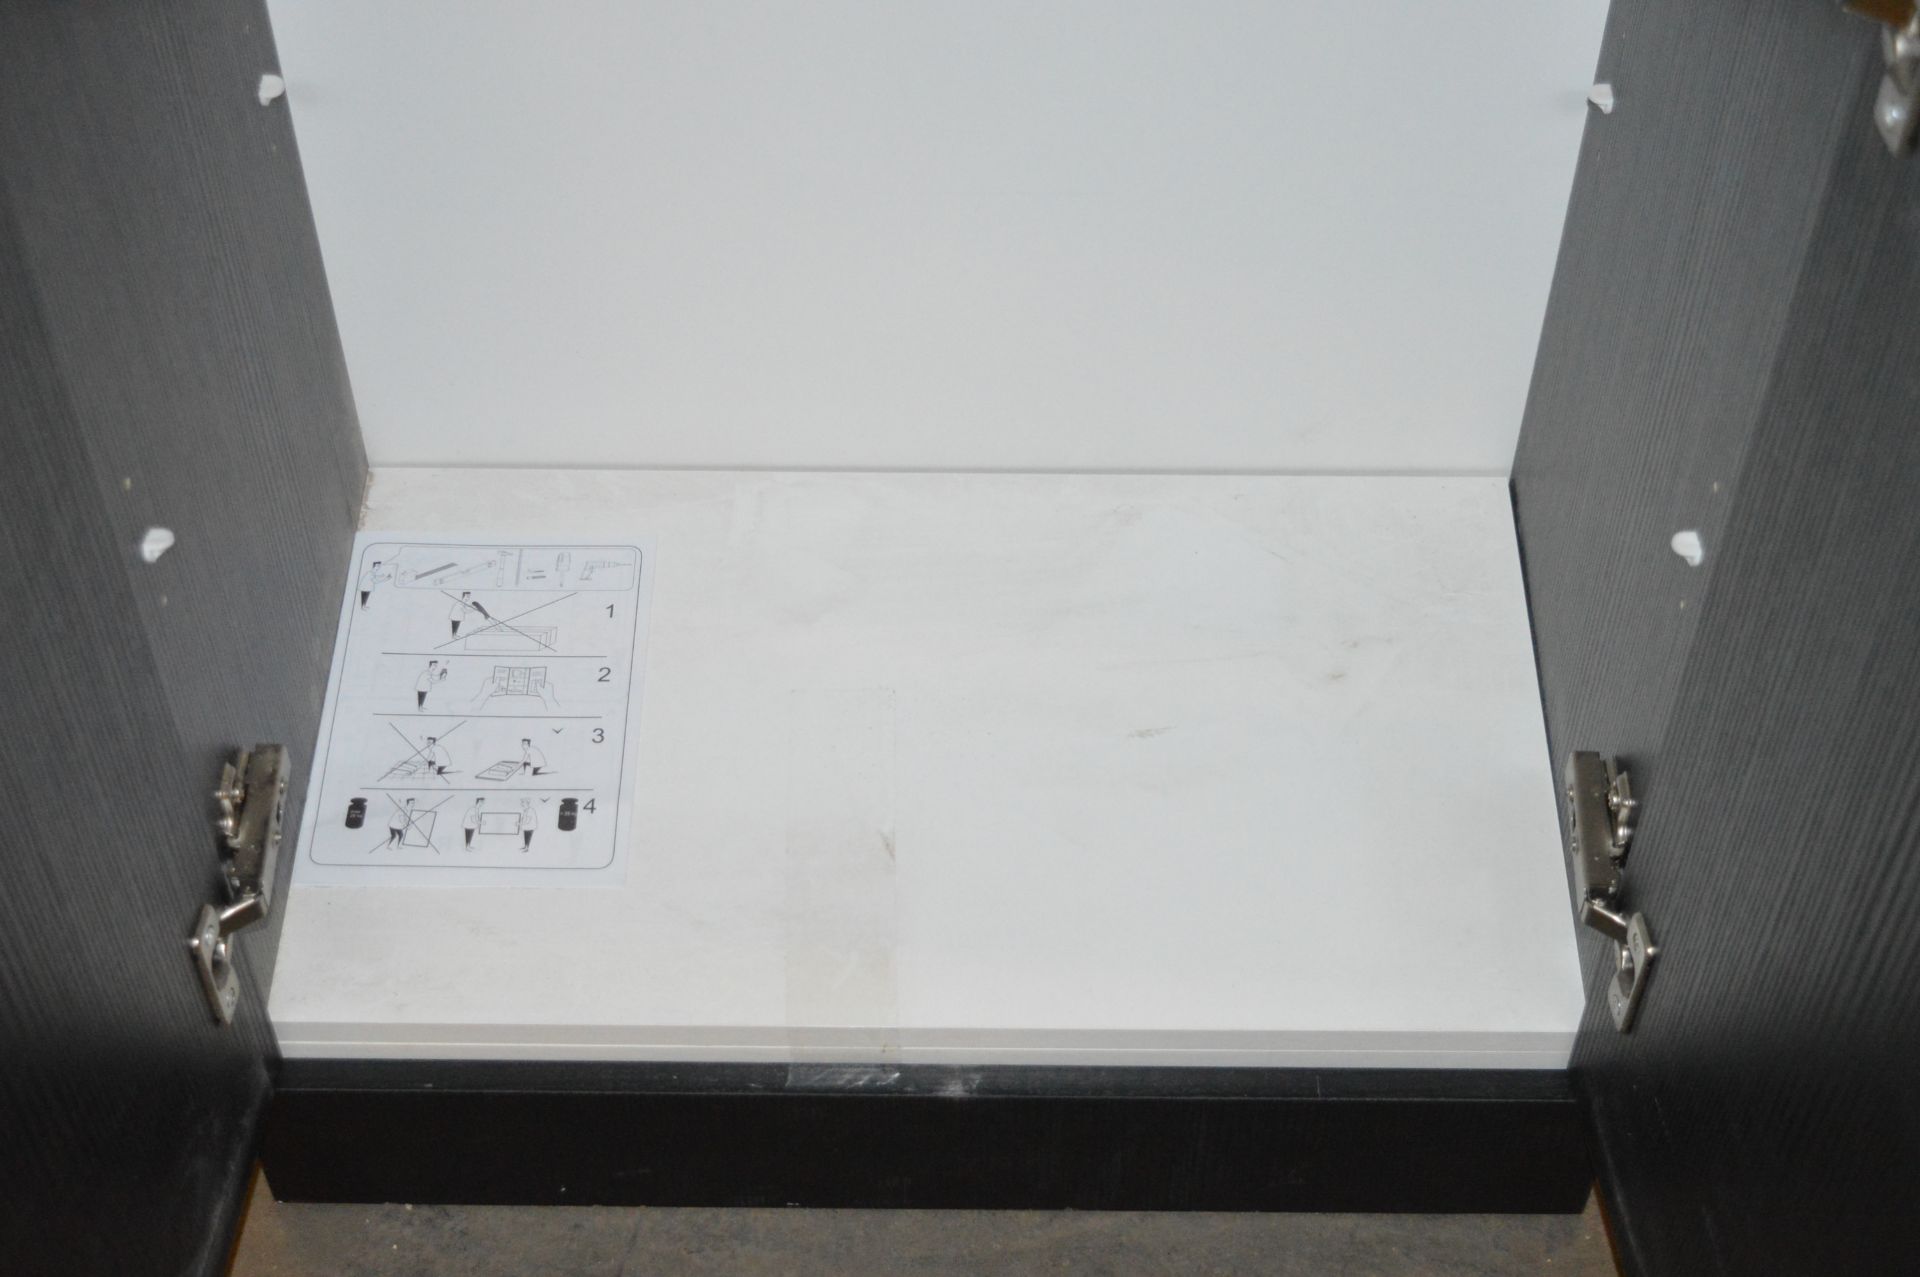 1 x Drift Essen Grey 2 Door Floor Mounted Cabinet With Sink Basin and Chrome Handles - Unused - Image 4 of 5